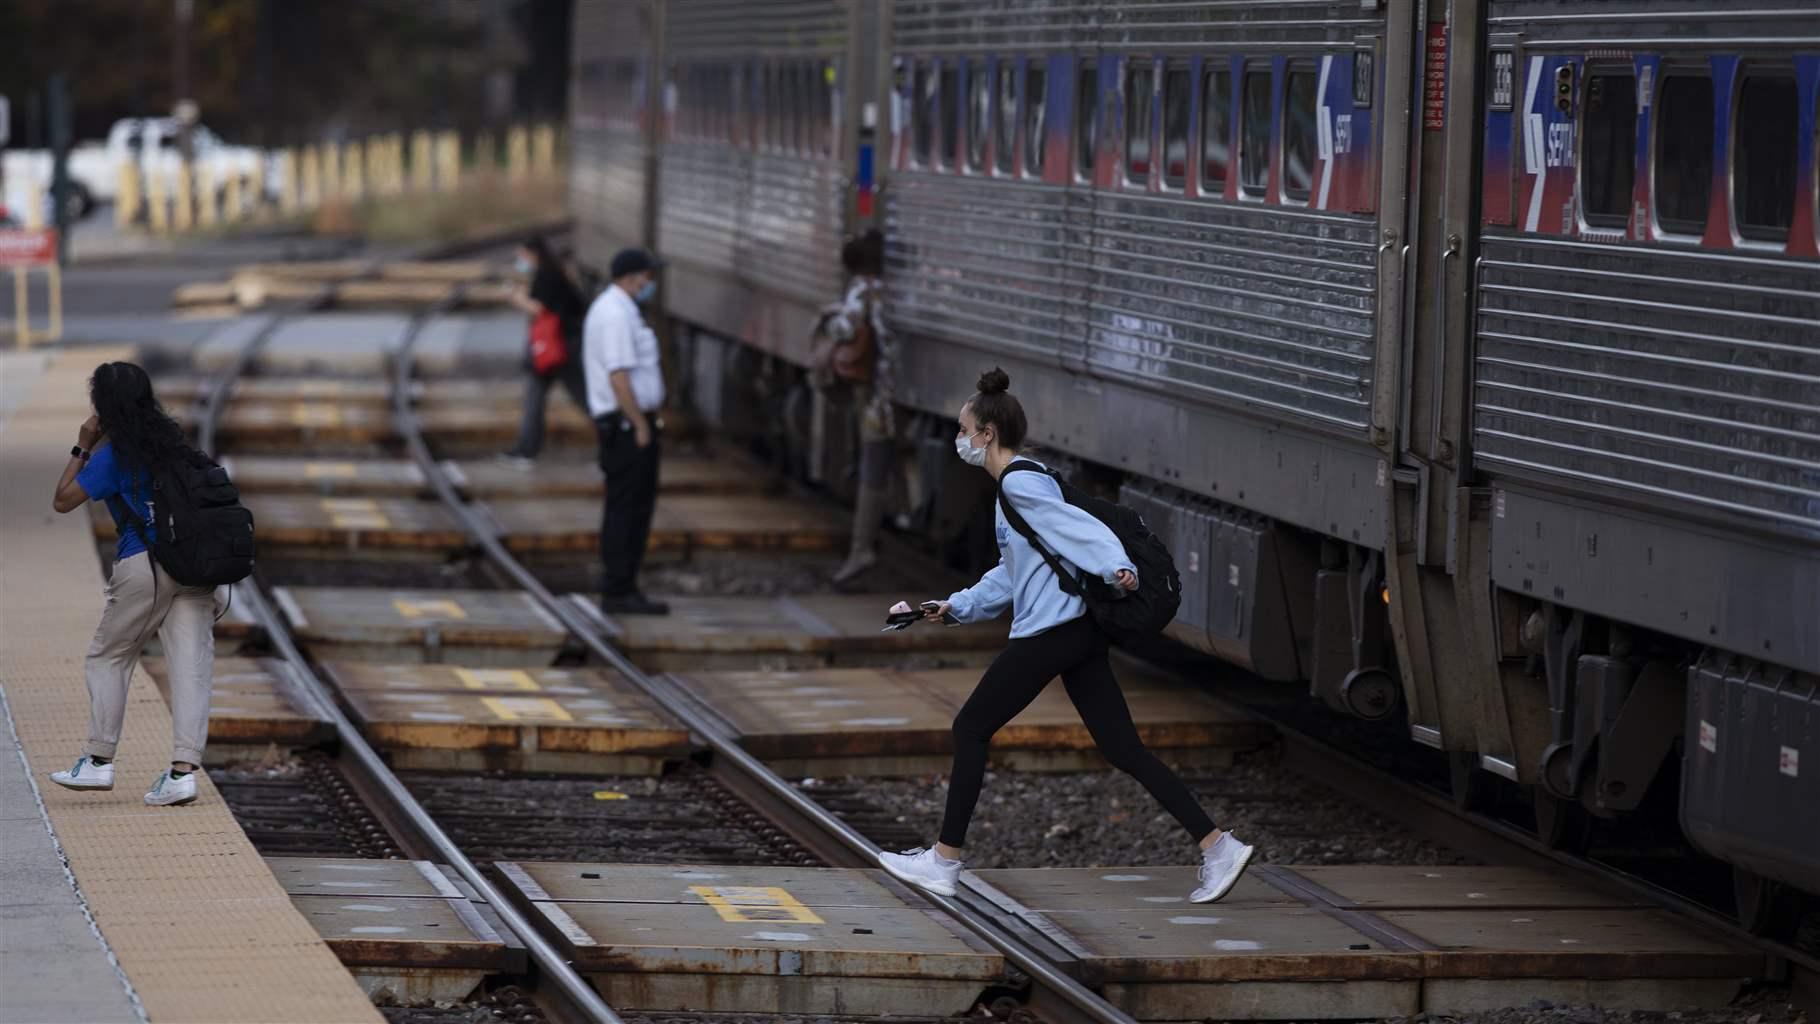 Passengers cross a SEPTA track